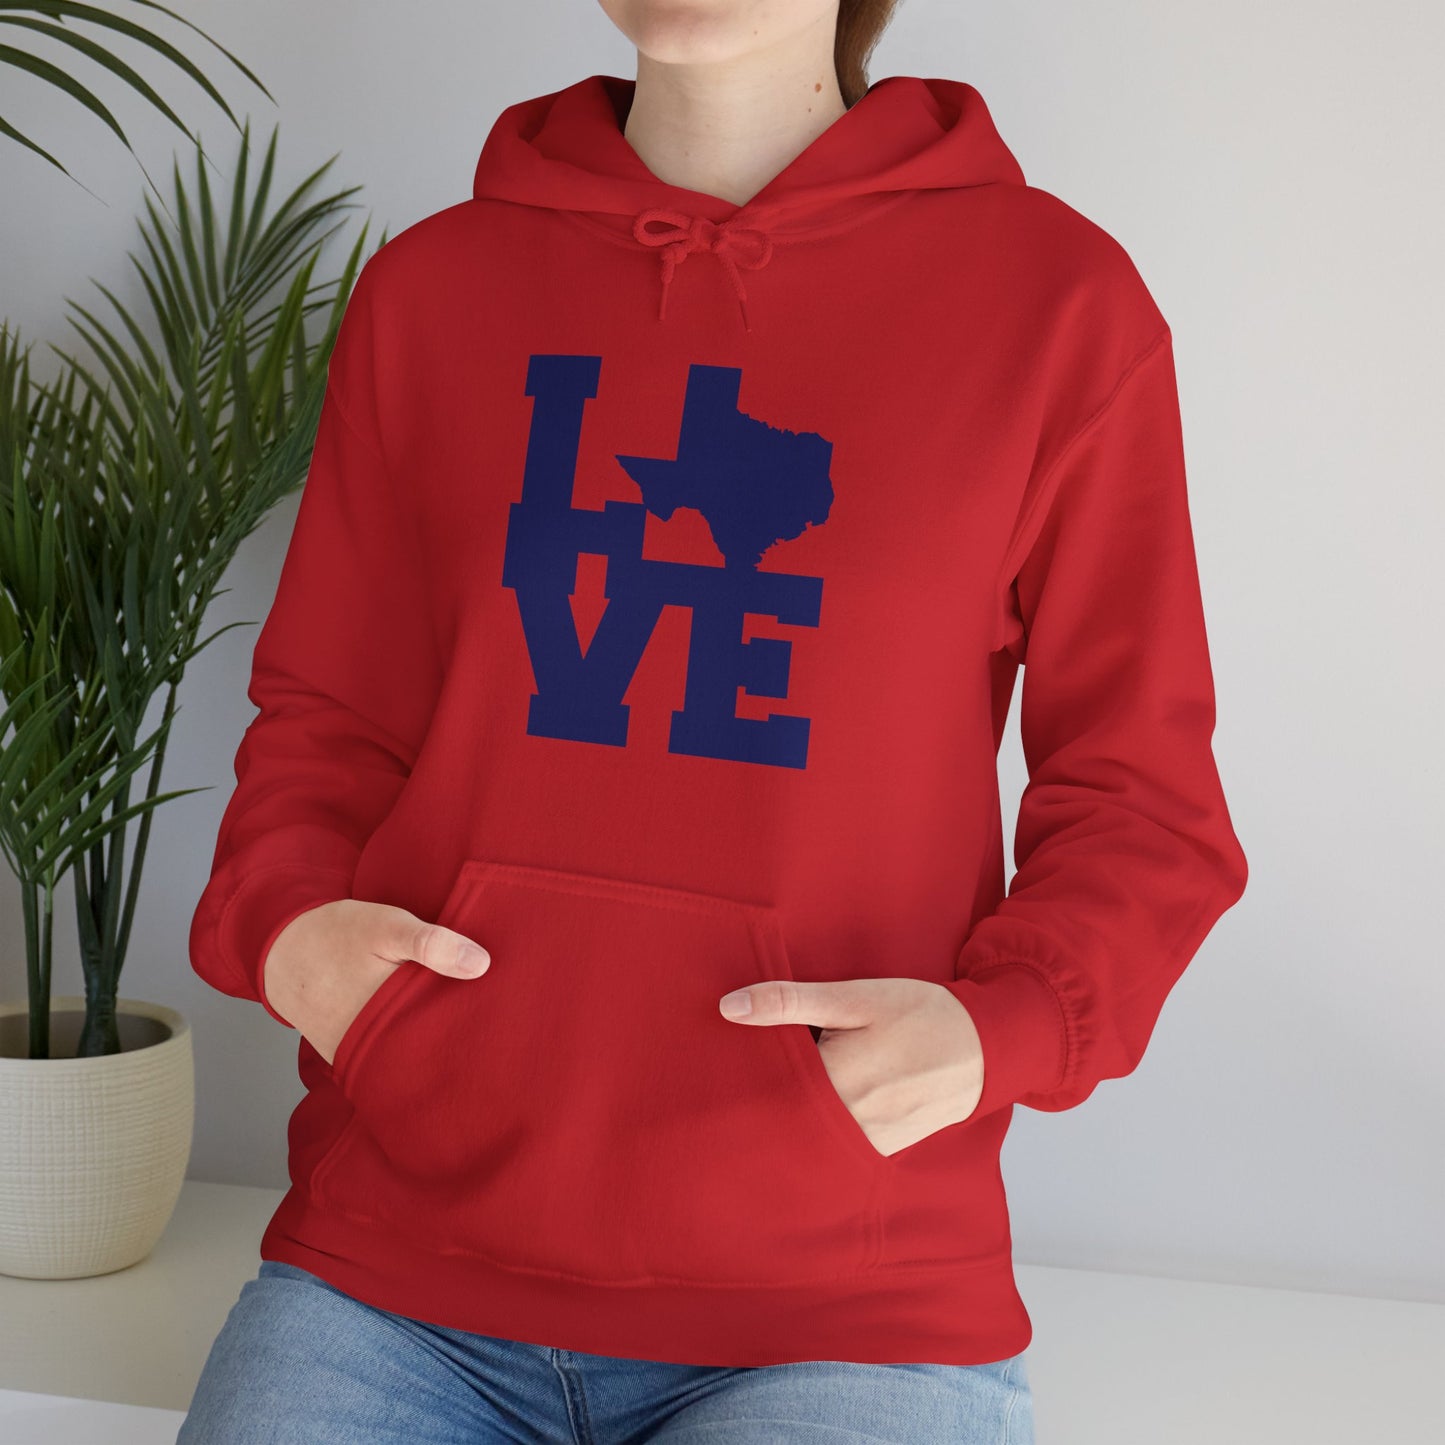 Chefao LoveTexas I, Unisex Heavy Blend Hooded Sweatshirt